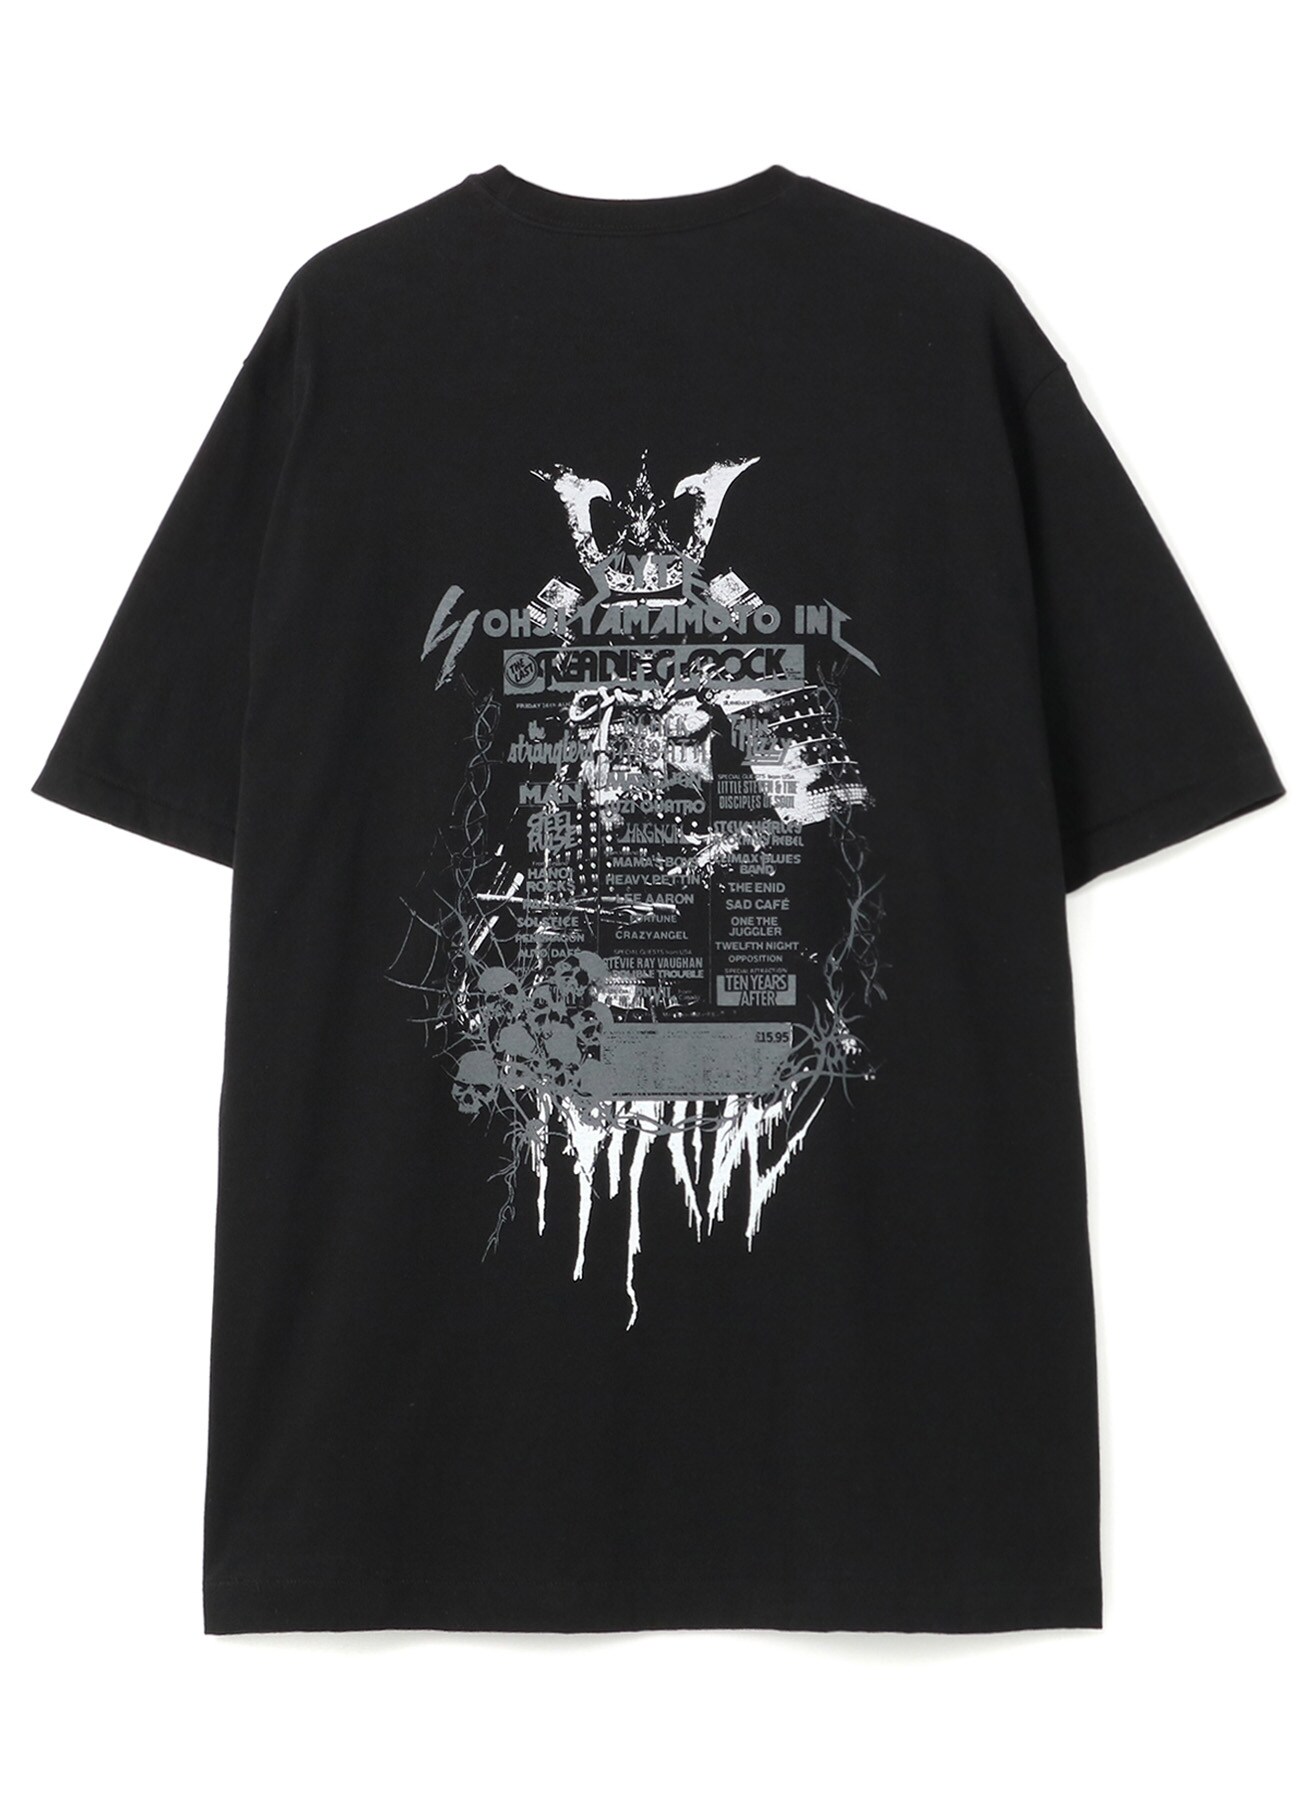 S'YTE × 1983 Original Reading Rock Festival Armor Metal T-shirt